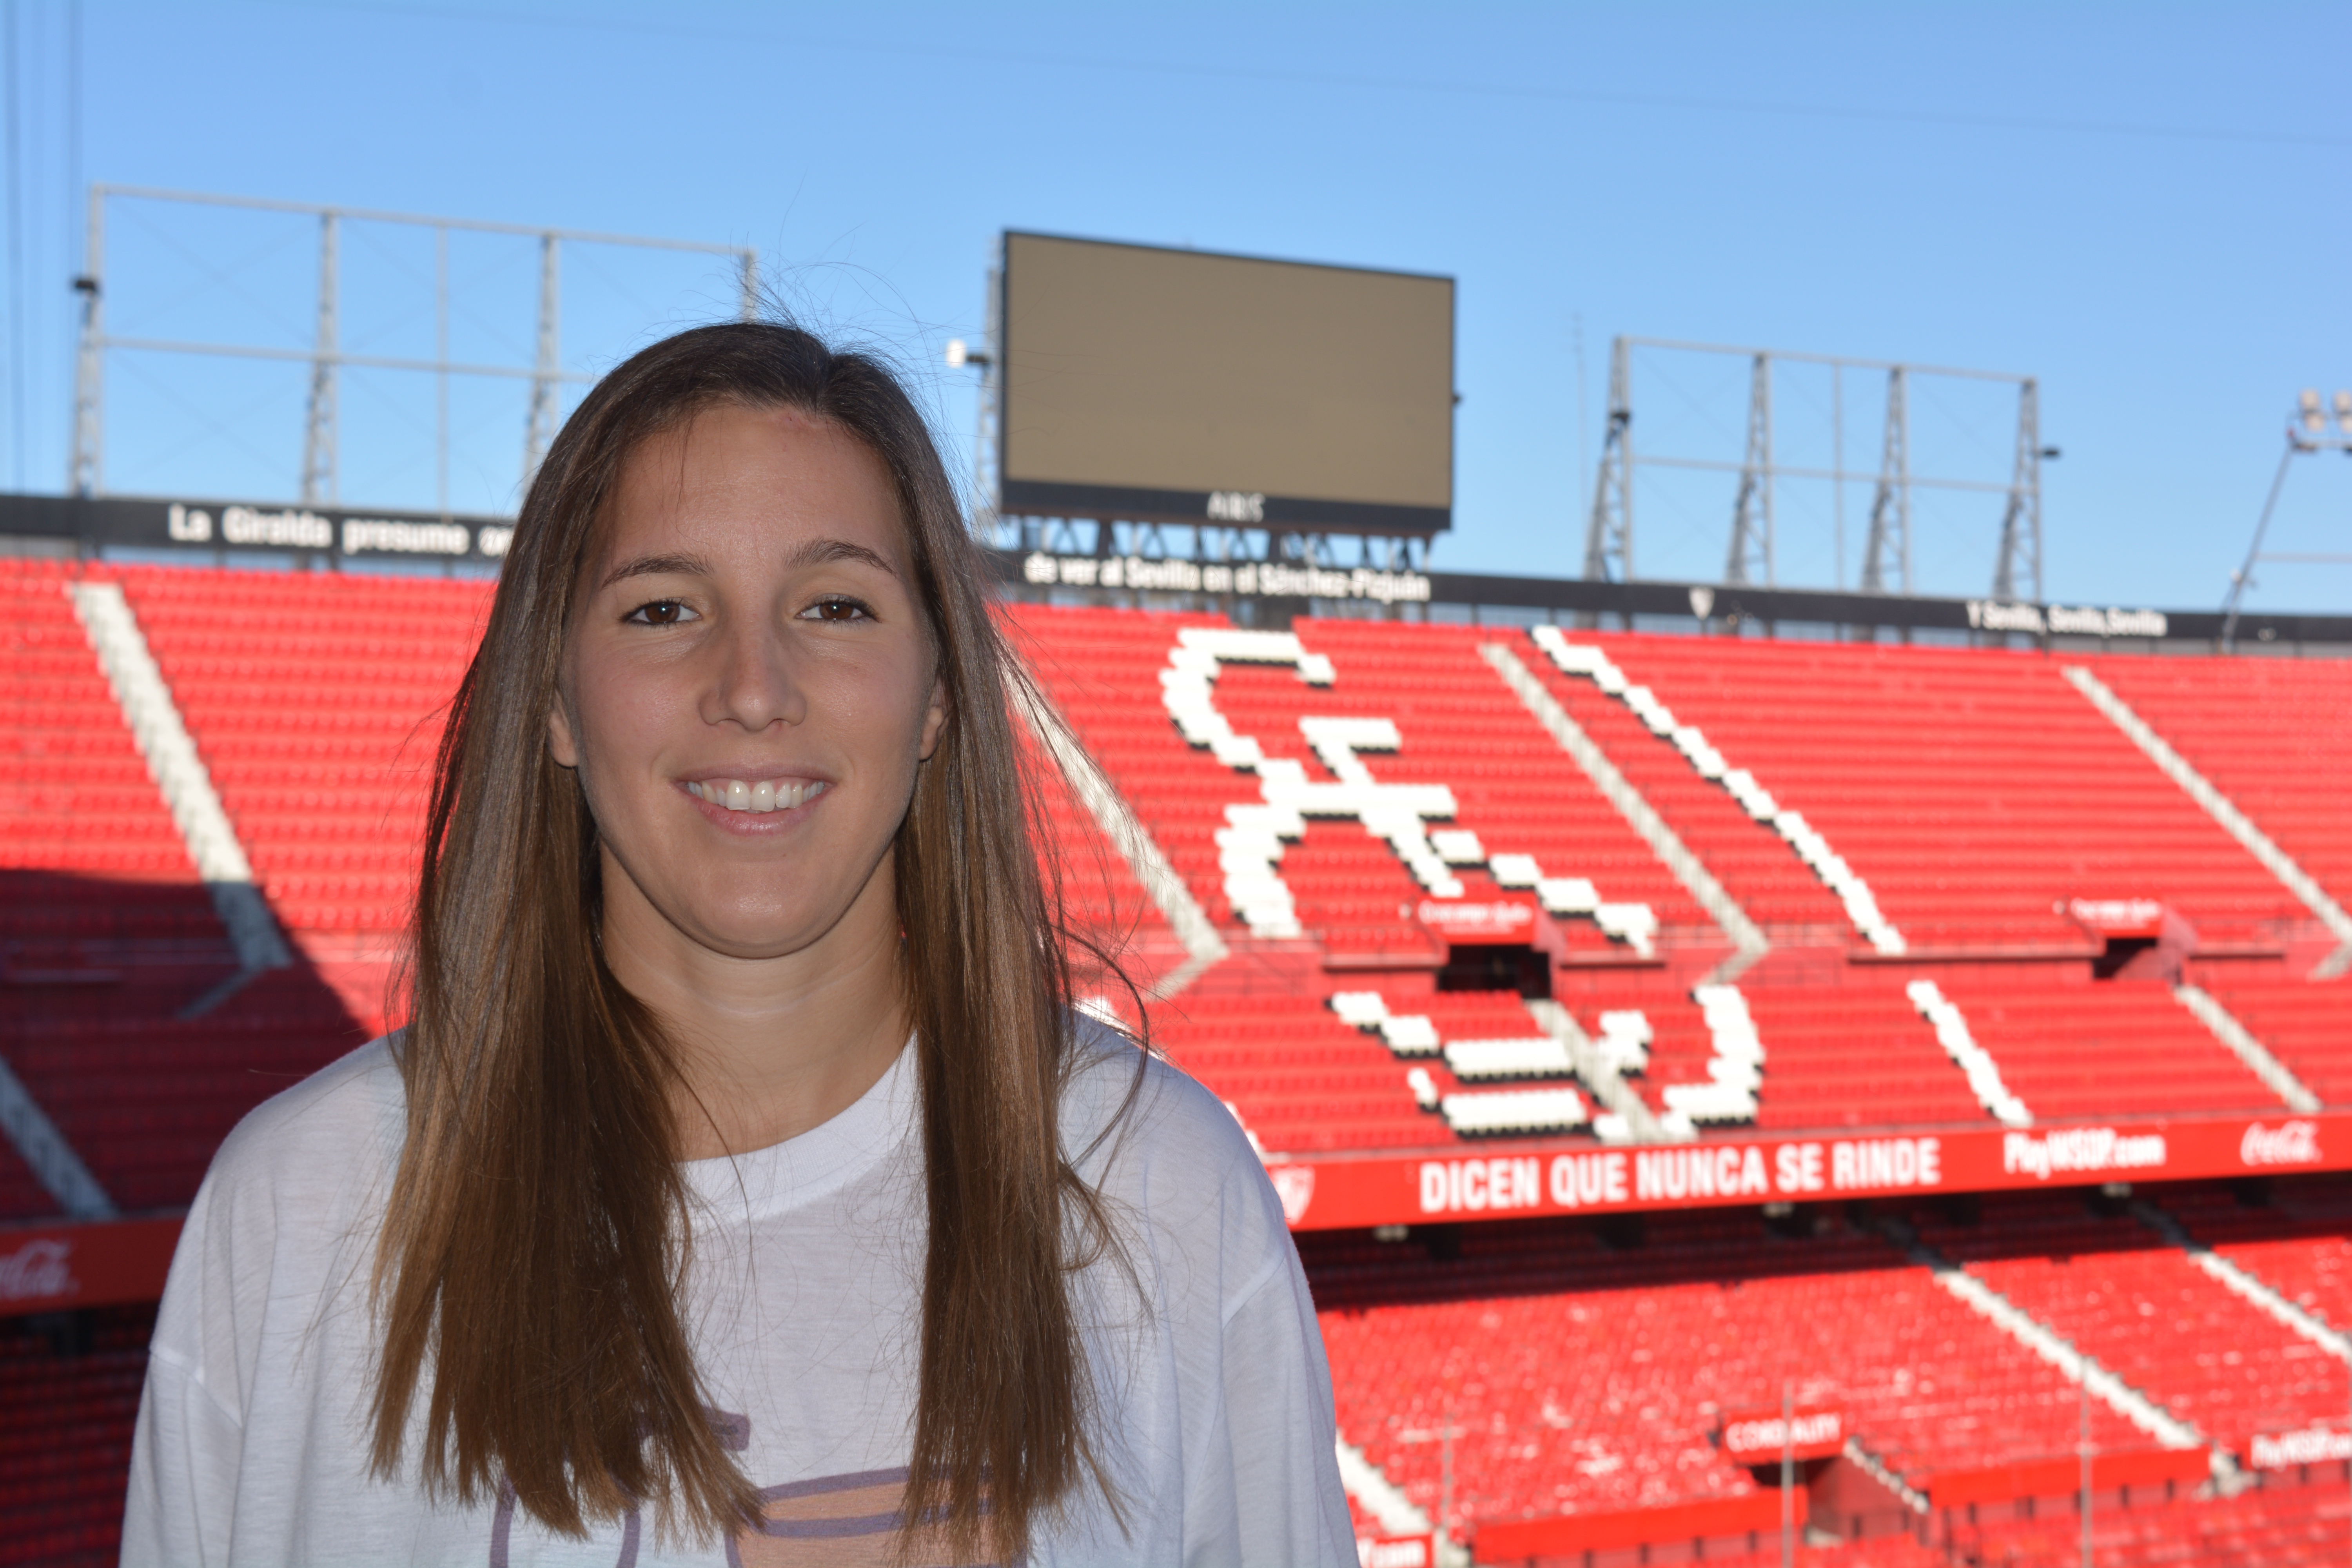 Jenni Morilla jugadora Sevilla FC Femenino